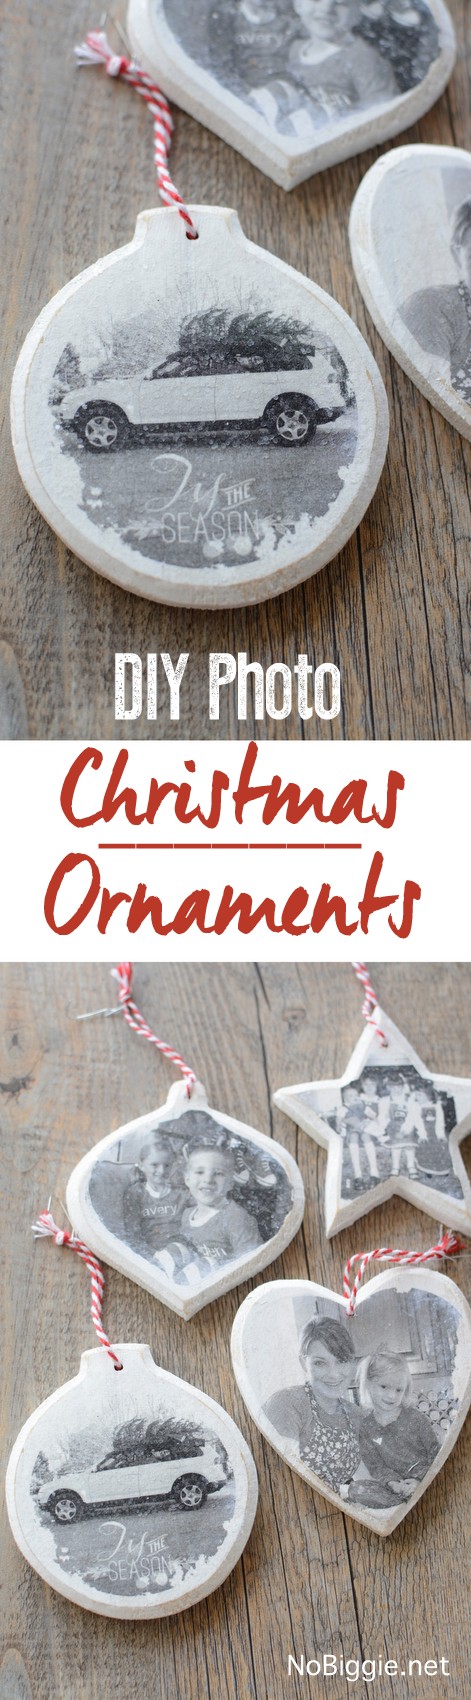 DIY Photo transfer ornament | NoBiggie.net